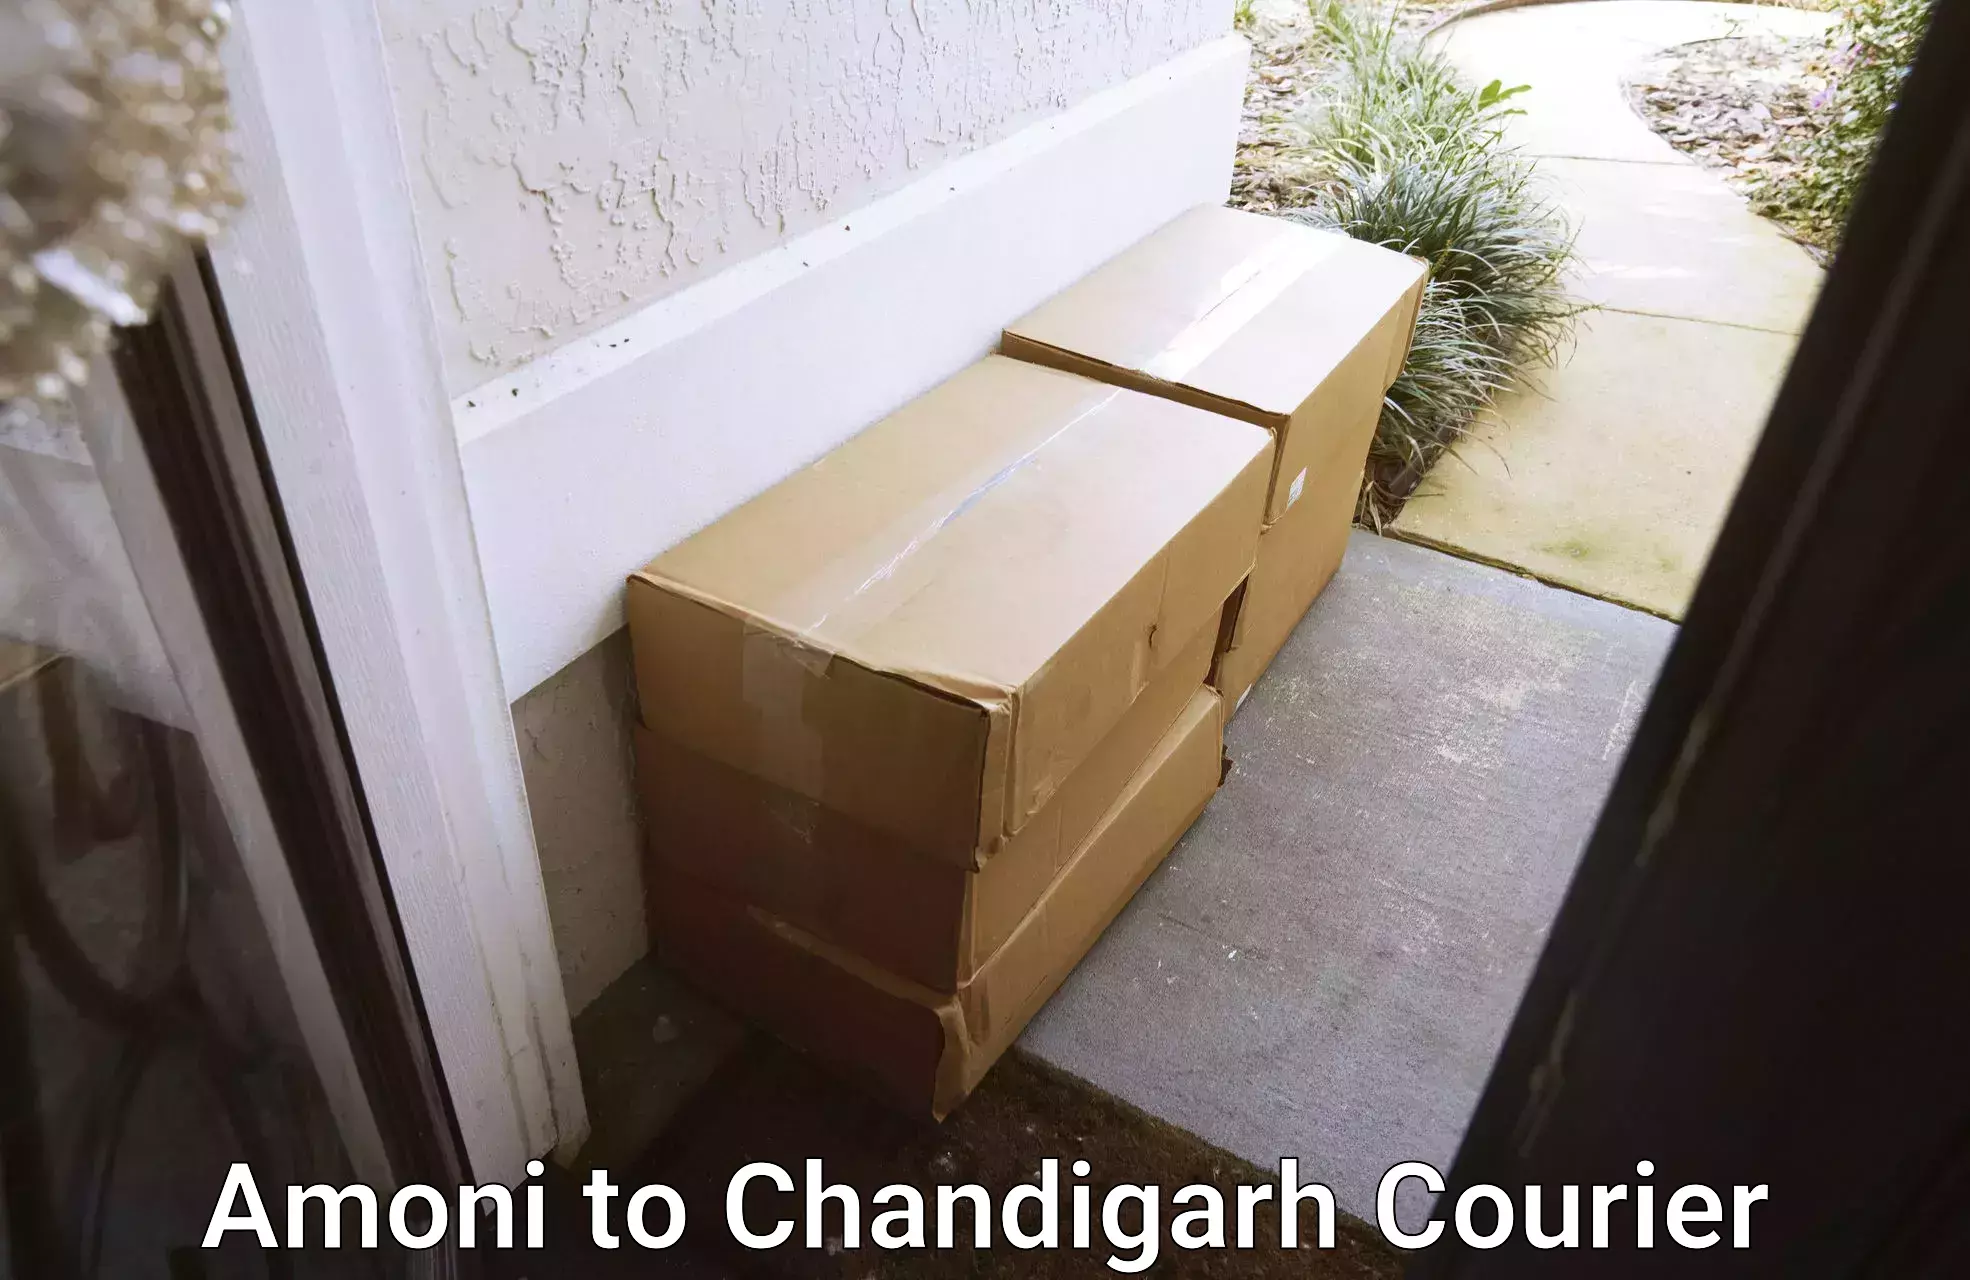 Advanced courier platforms Amoni to Chandigarh